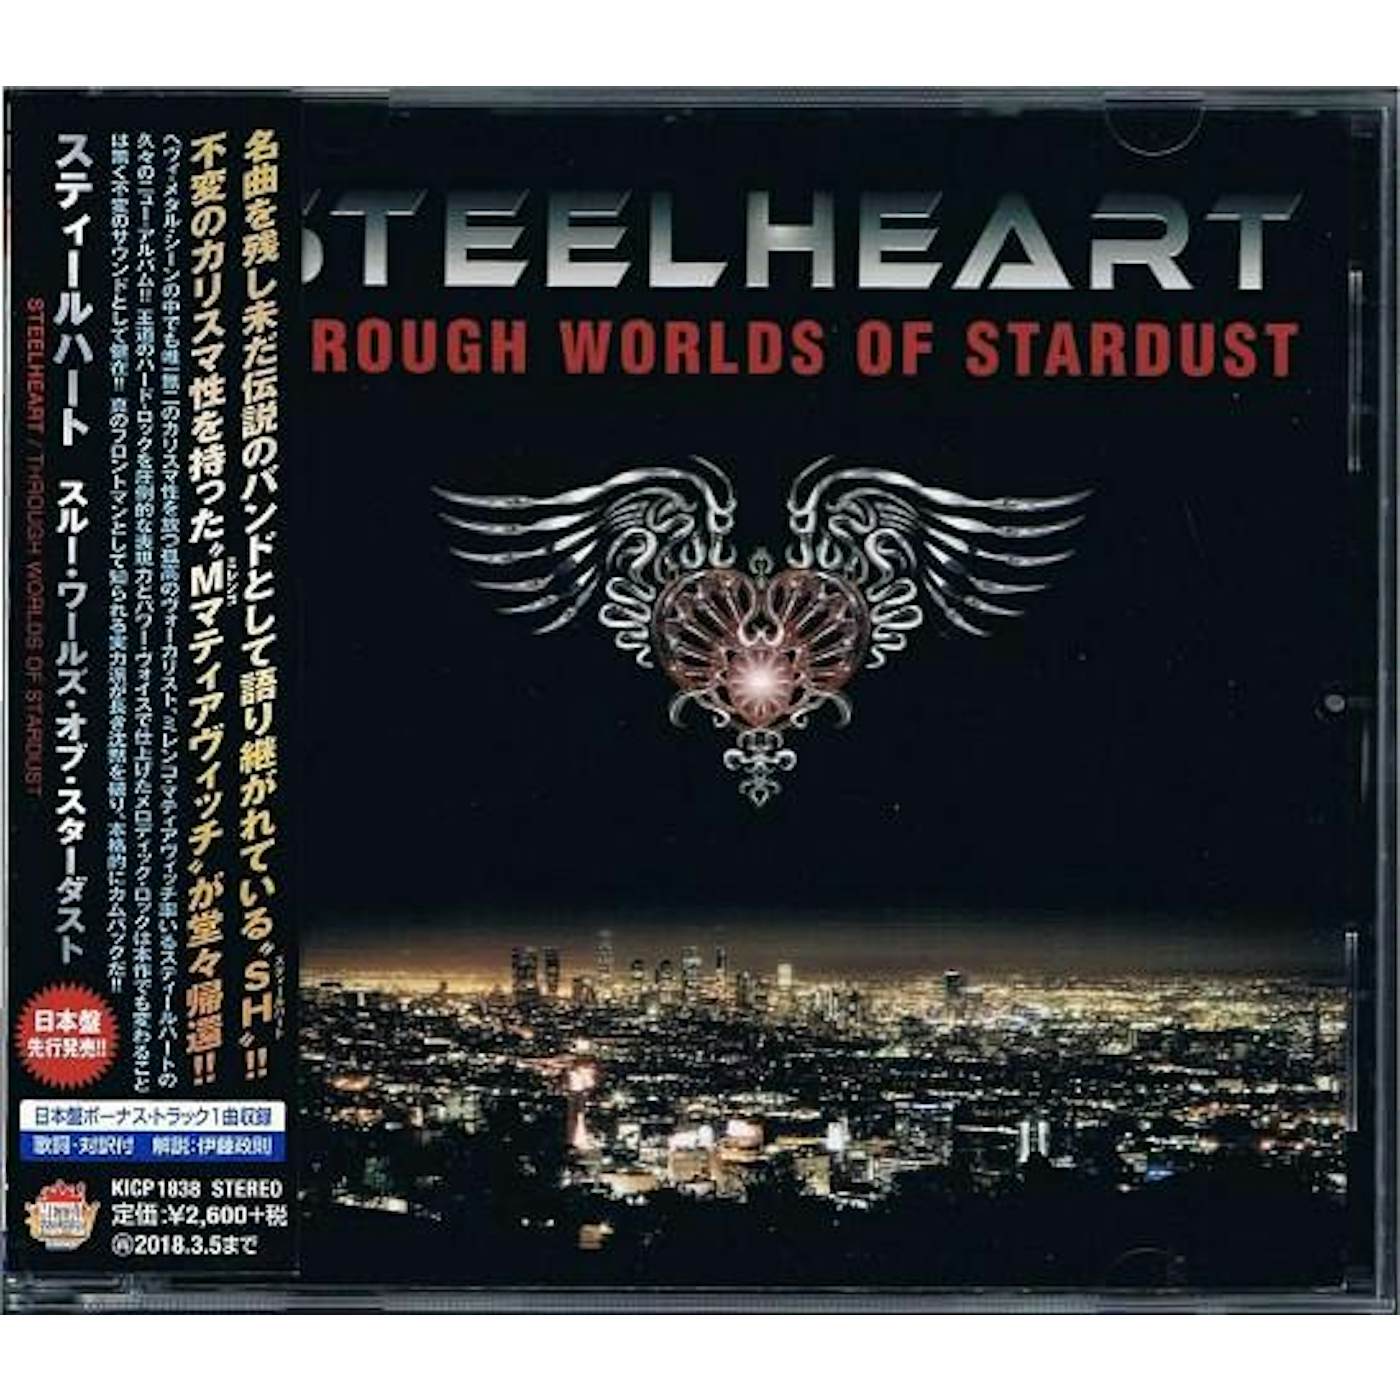 STEELHEART THROUGH WORLDS OF STARDUST (BONUS TRACK) CD